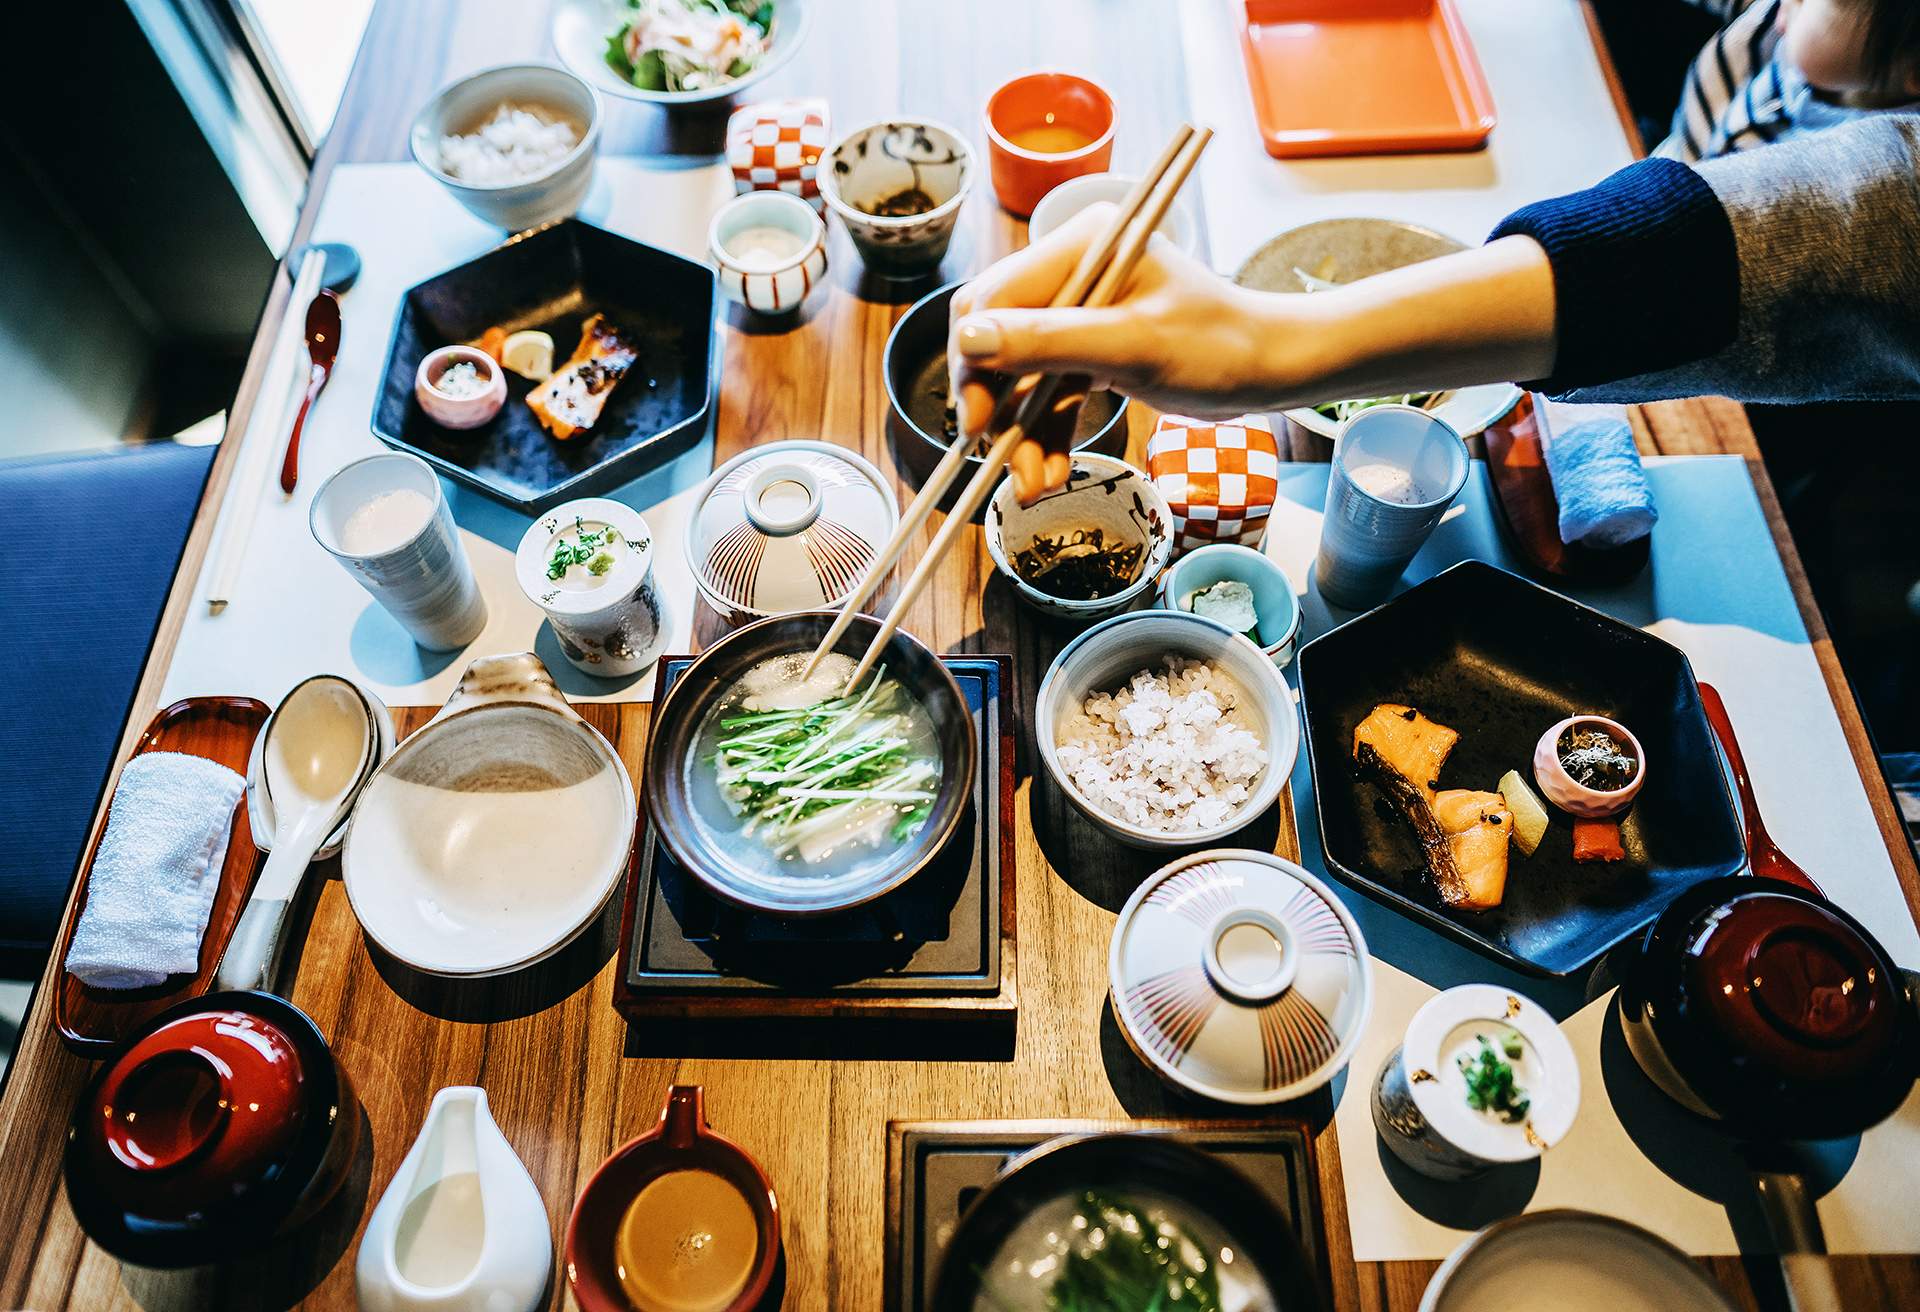 Taste the very best food in Japan and treat your taste buds